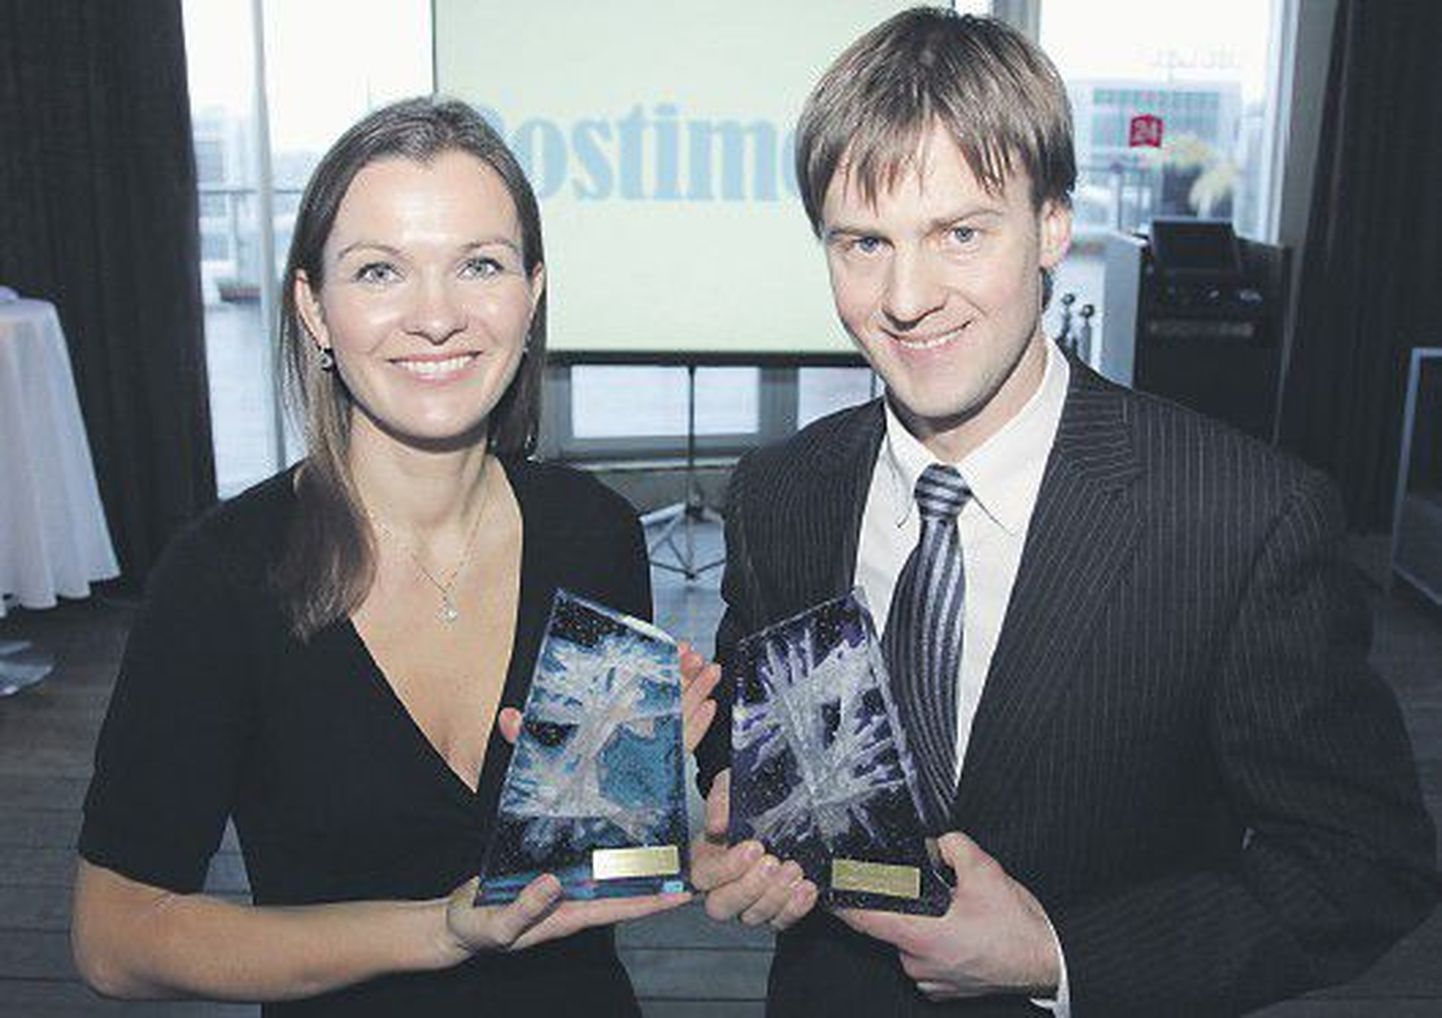 Анне Суллинг и Ханну Ламп — обладатели титула «Человек года 2011».